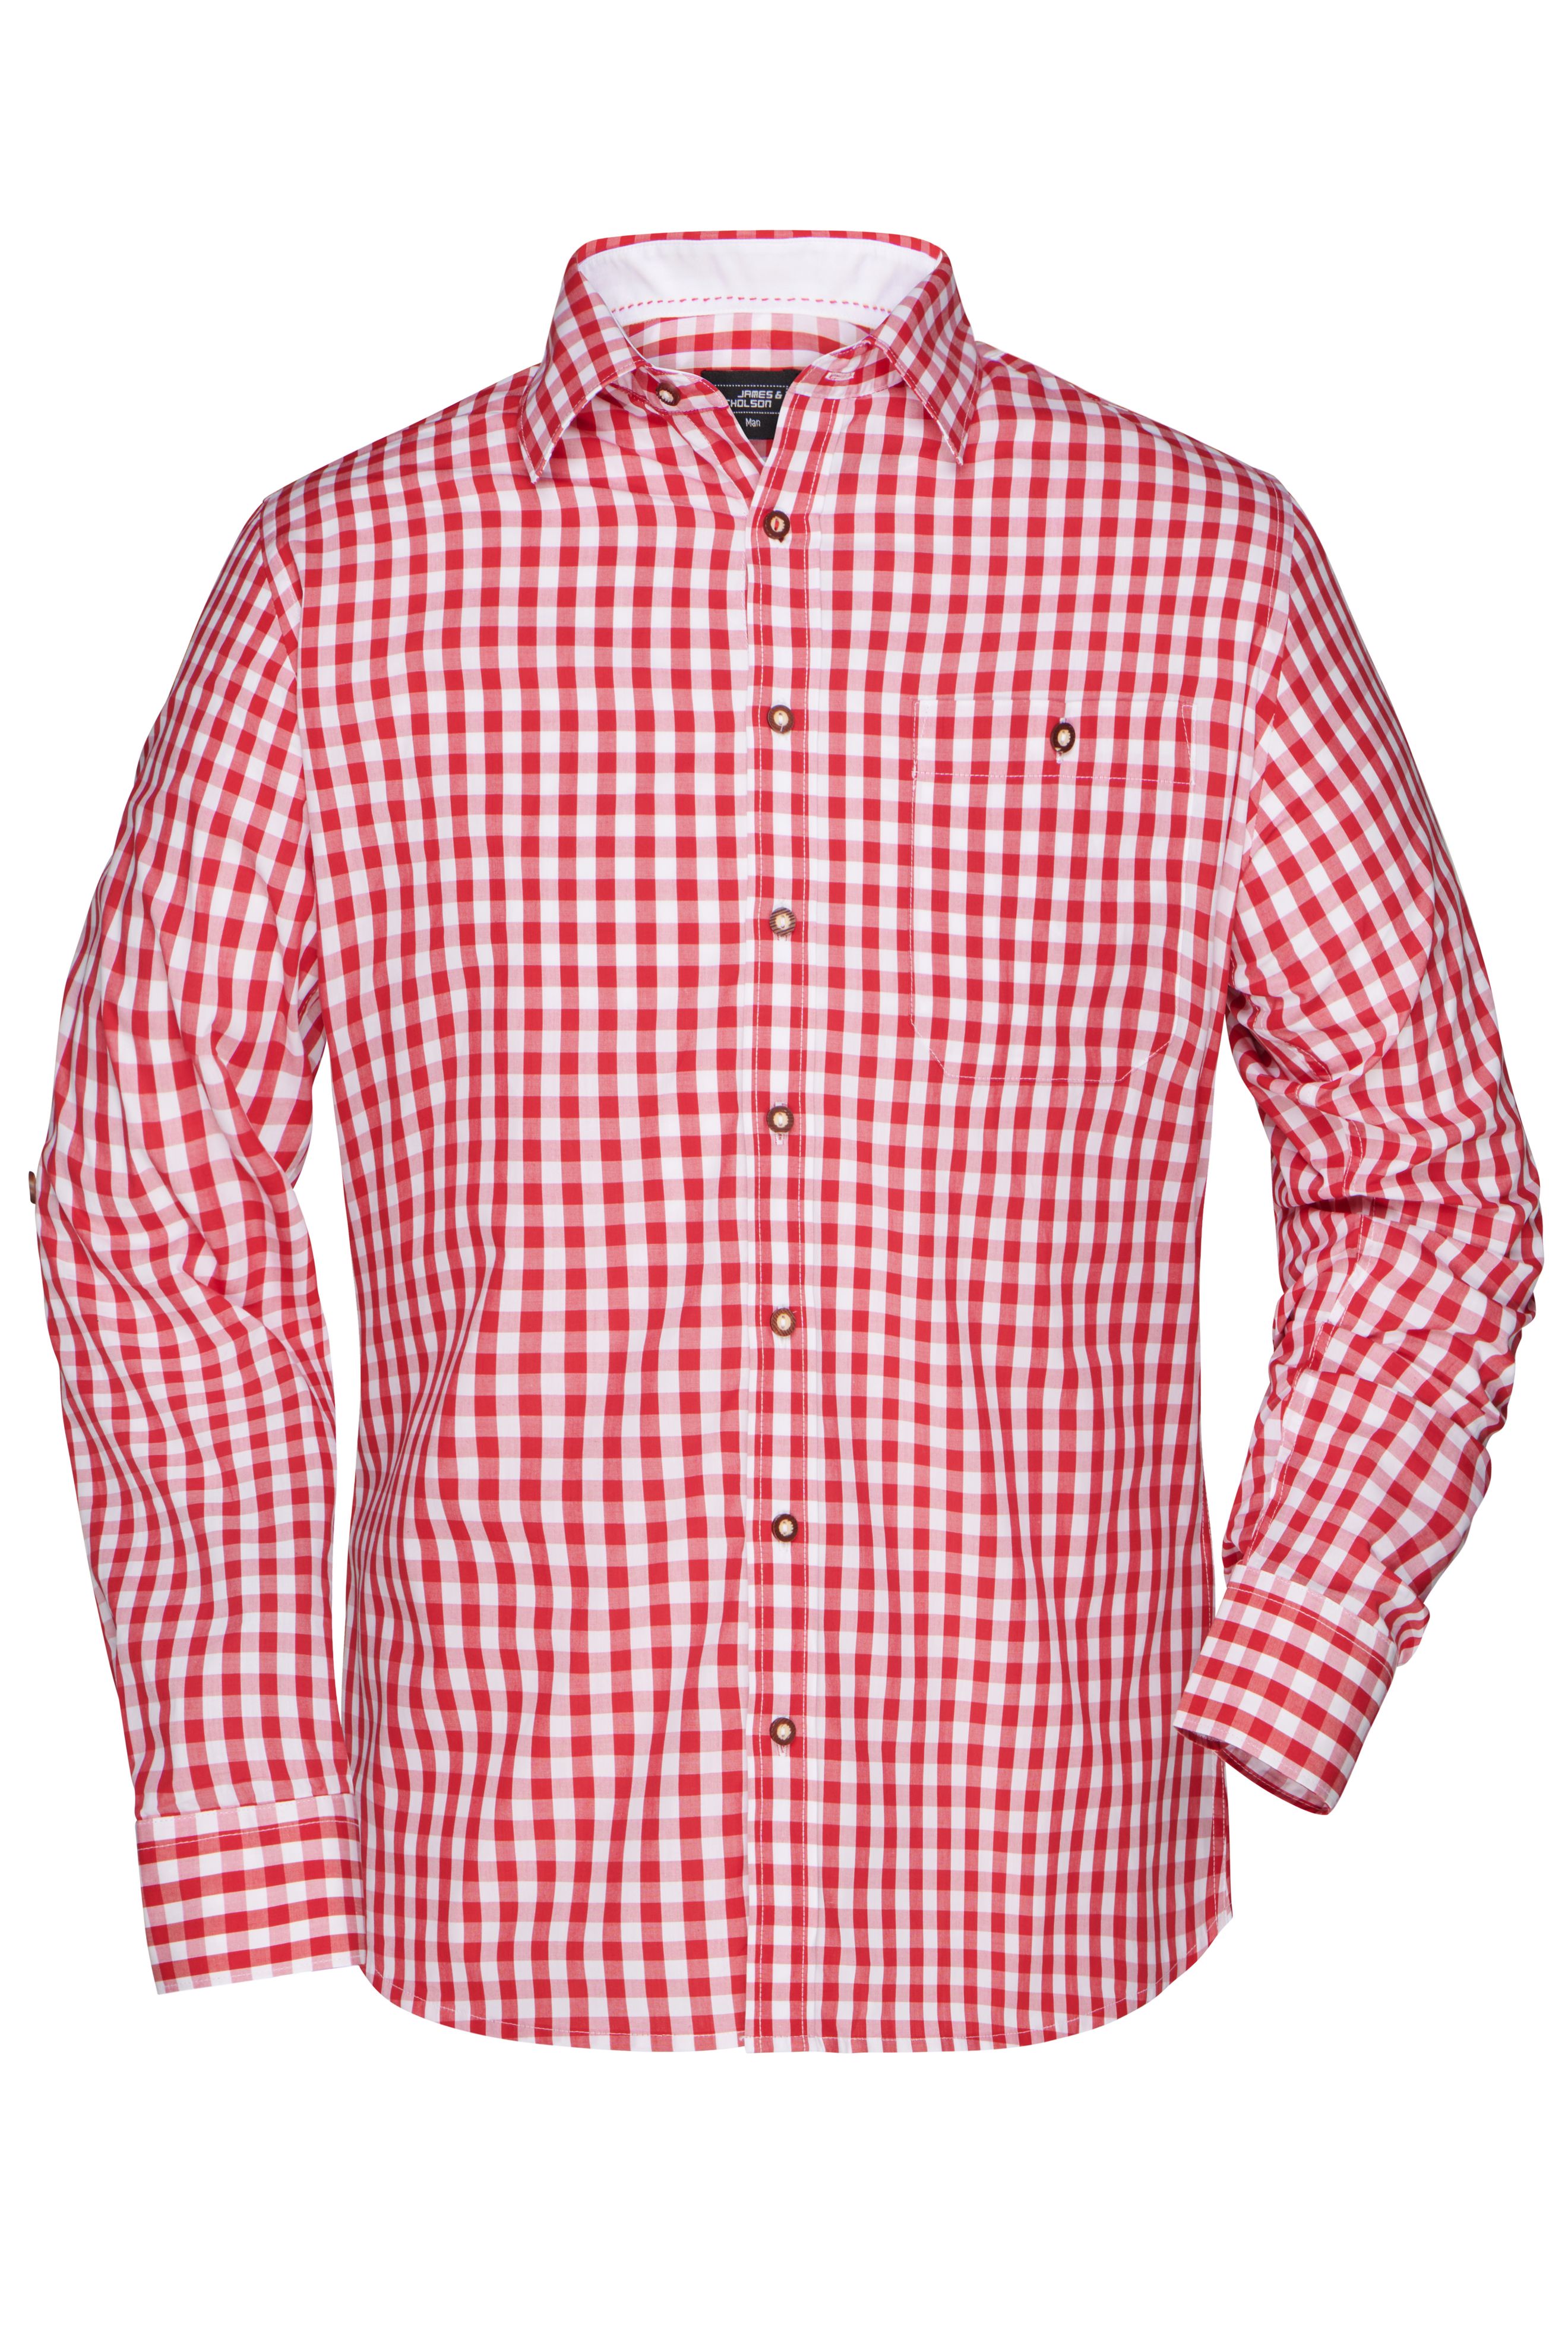 Men's Traditional Shirt JN638 Damen-Bluse und Herren-Hemd im klassischen Trachtenlook